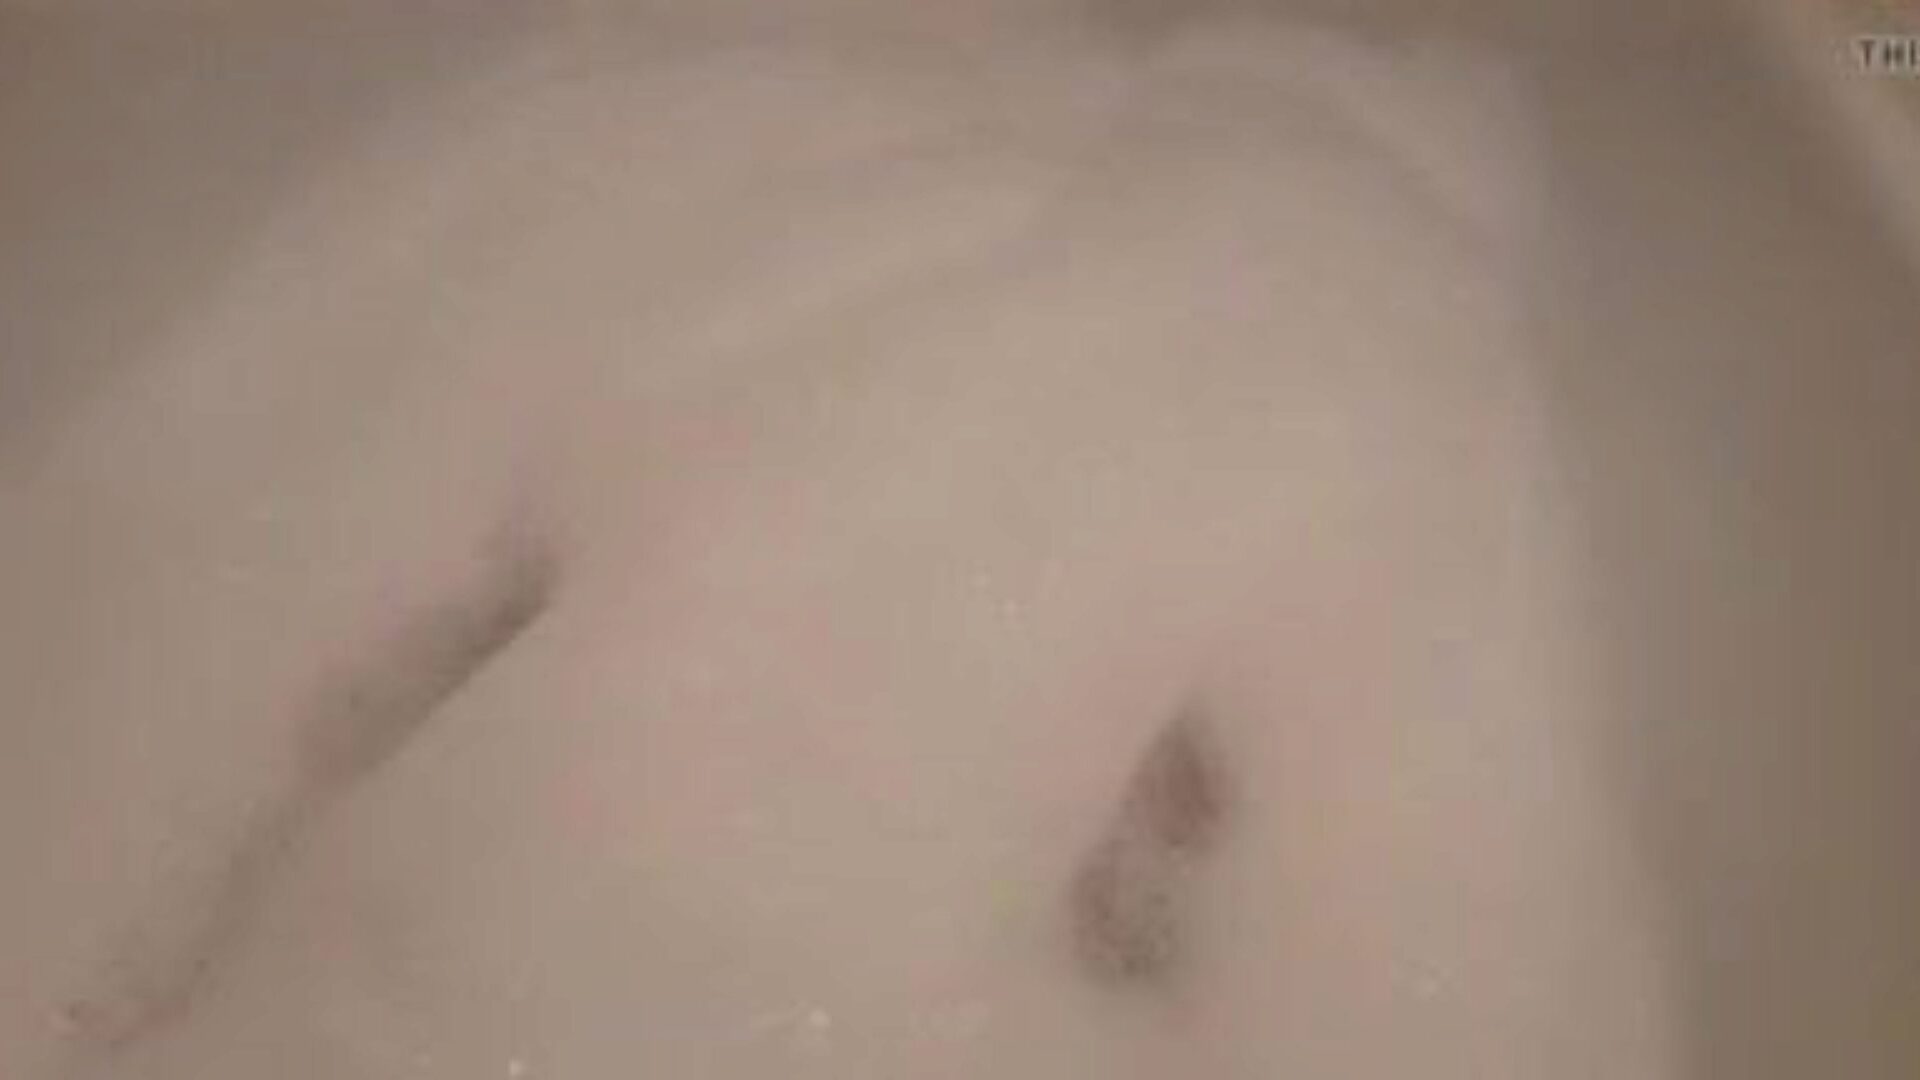 linda bath2: δωρεάν σφιχτό πορνό βίντεο μουνί 10 - xhamster παρακολουθήστε linda bath2 tube fuckfest βίντεο δωρεάν για όλους στο xhamster, με τη πιο σέξι συλλογή γερμανικών σφιχτό μουνί, νερό και εξήντα εννέα βινιέτες βίντεο πορνό